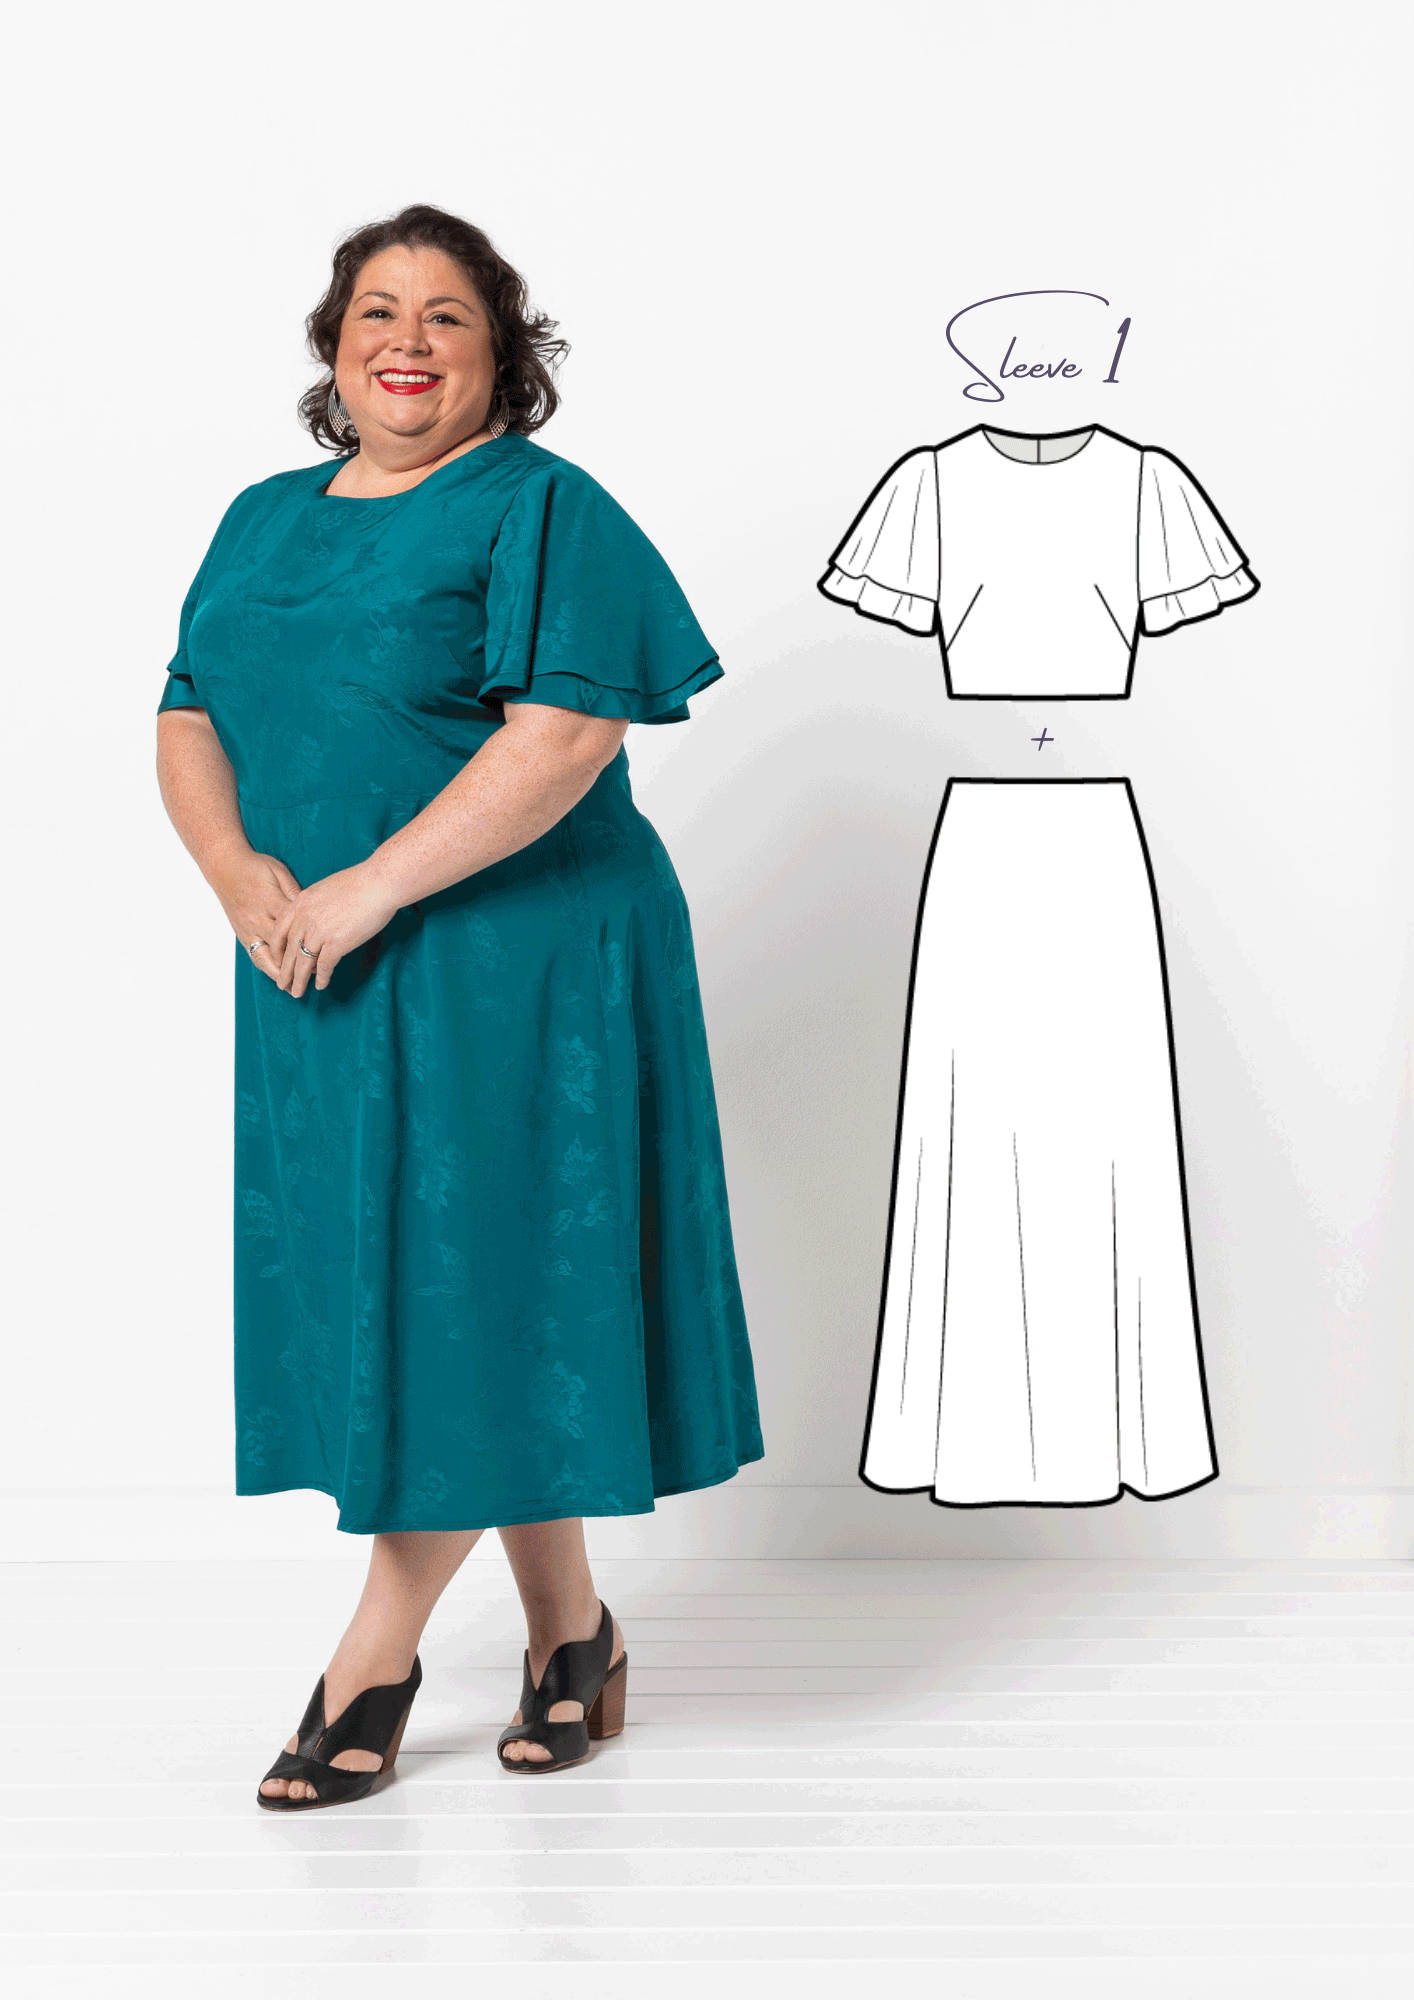 Queenie Woven Dress - 1 dress, many options 